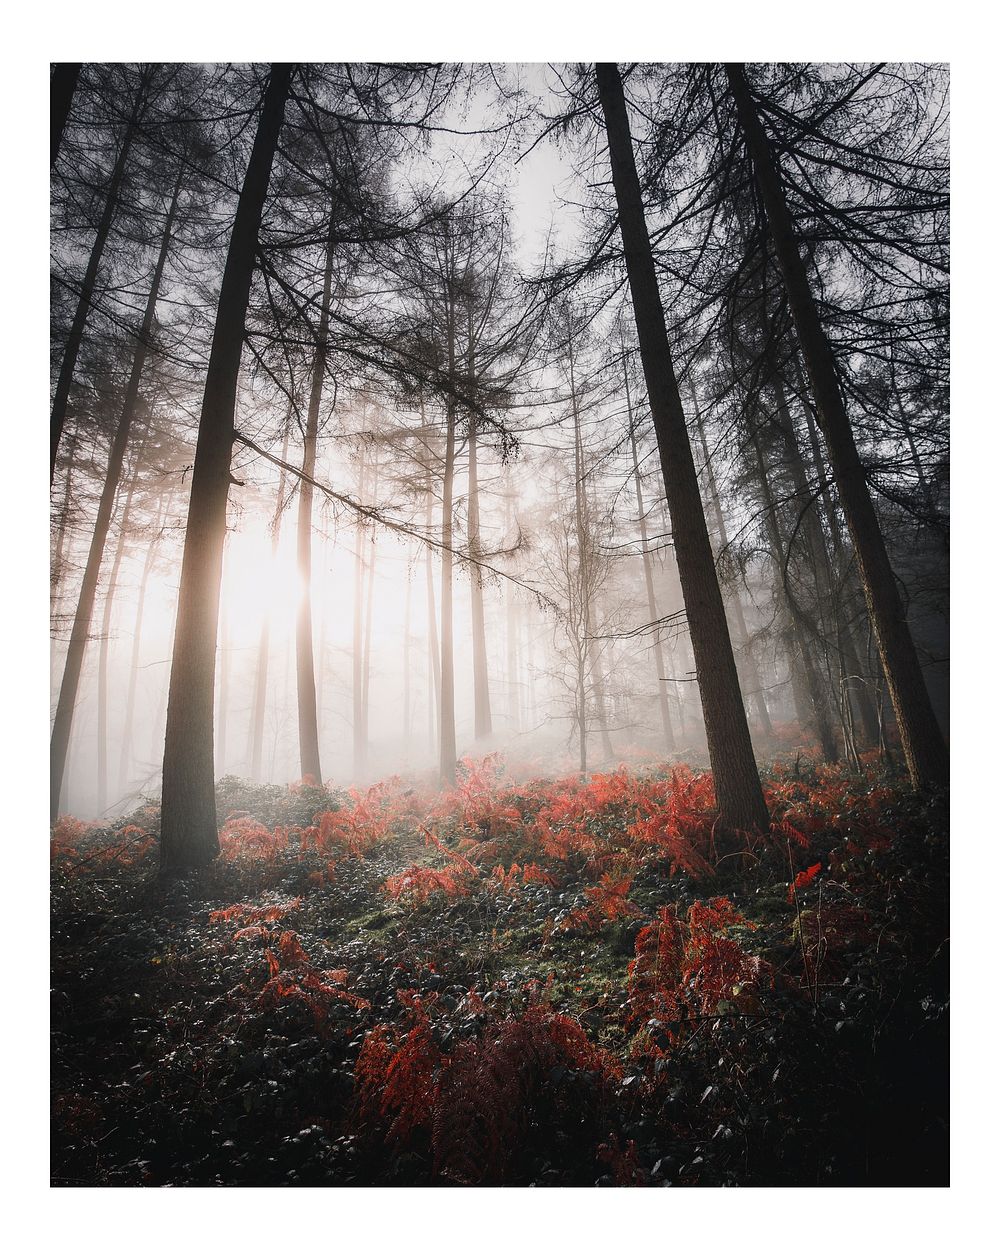 Aesthetic woods art print poster, sunlight shining through the misty woods